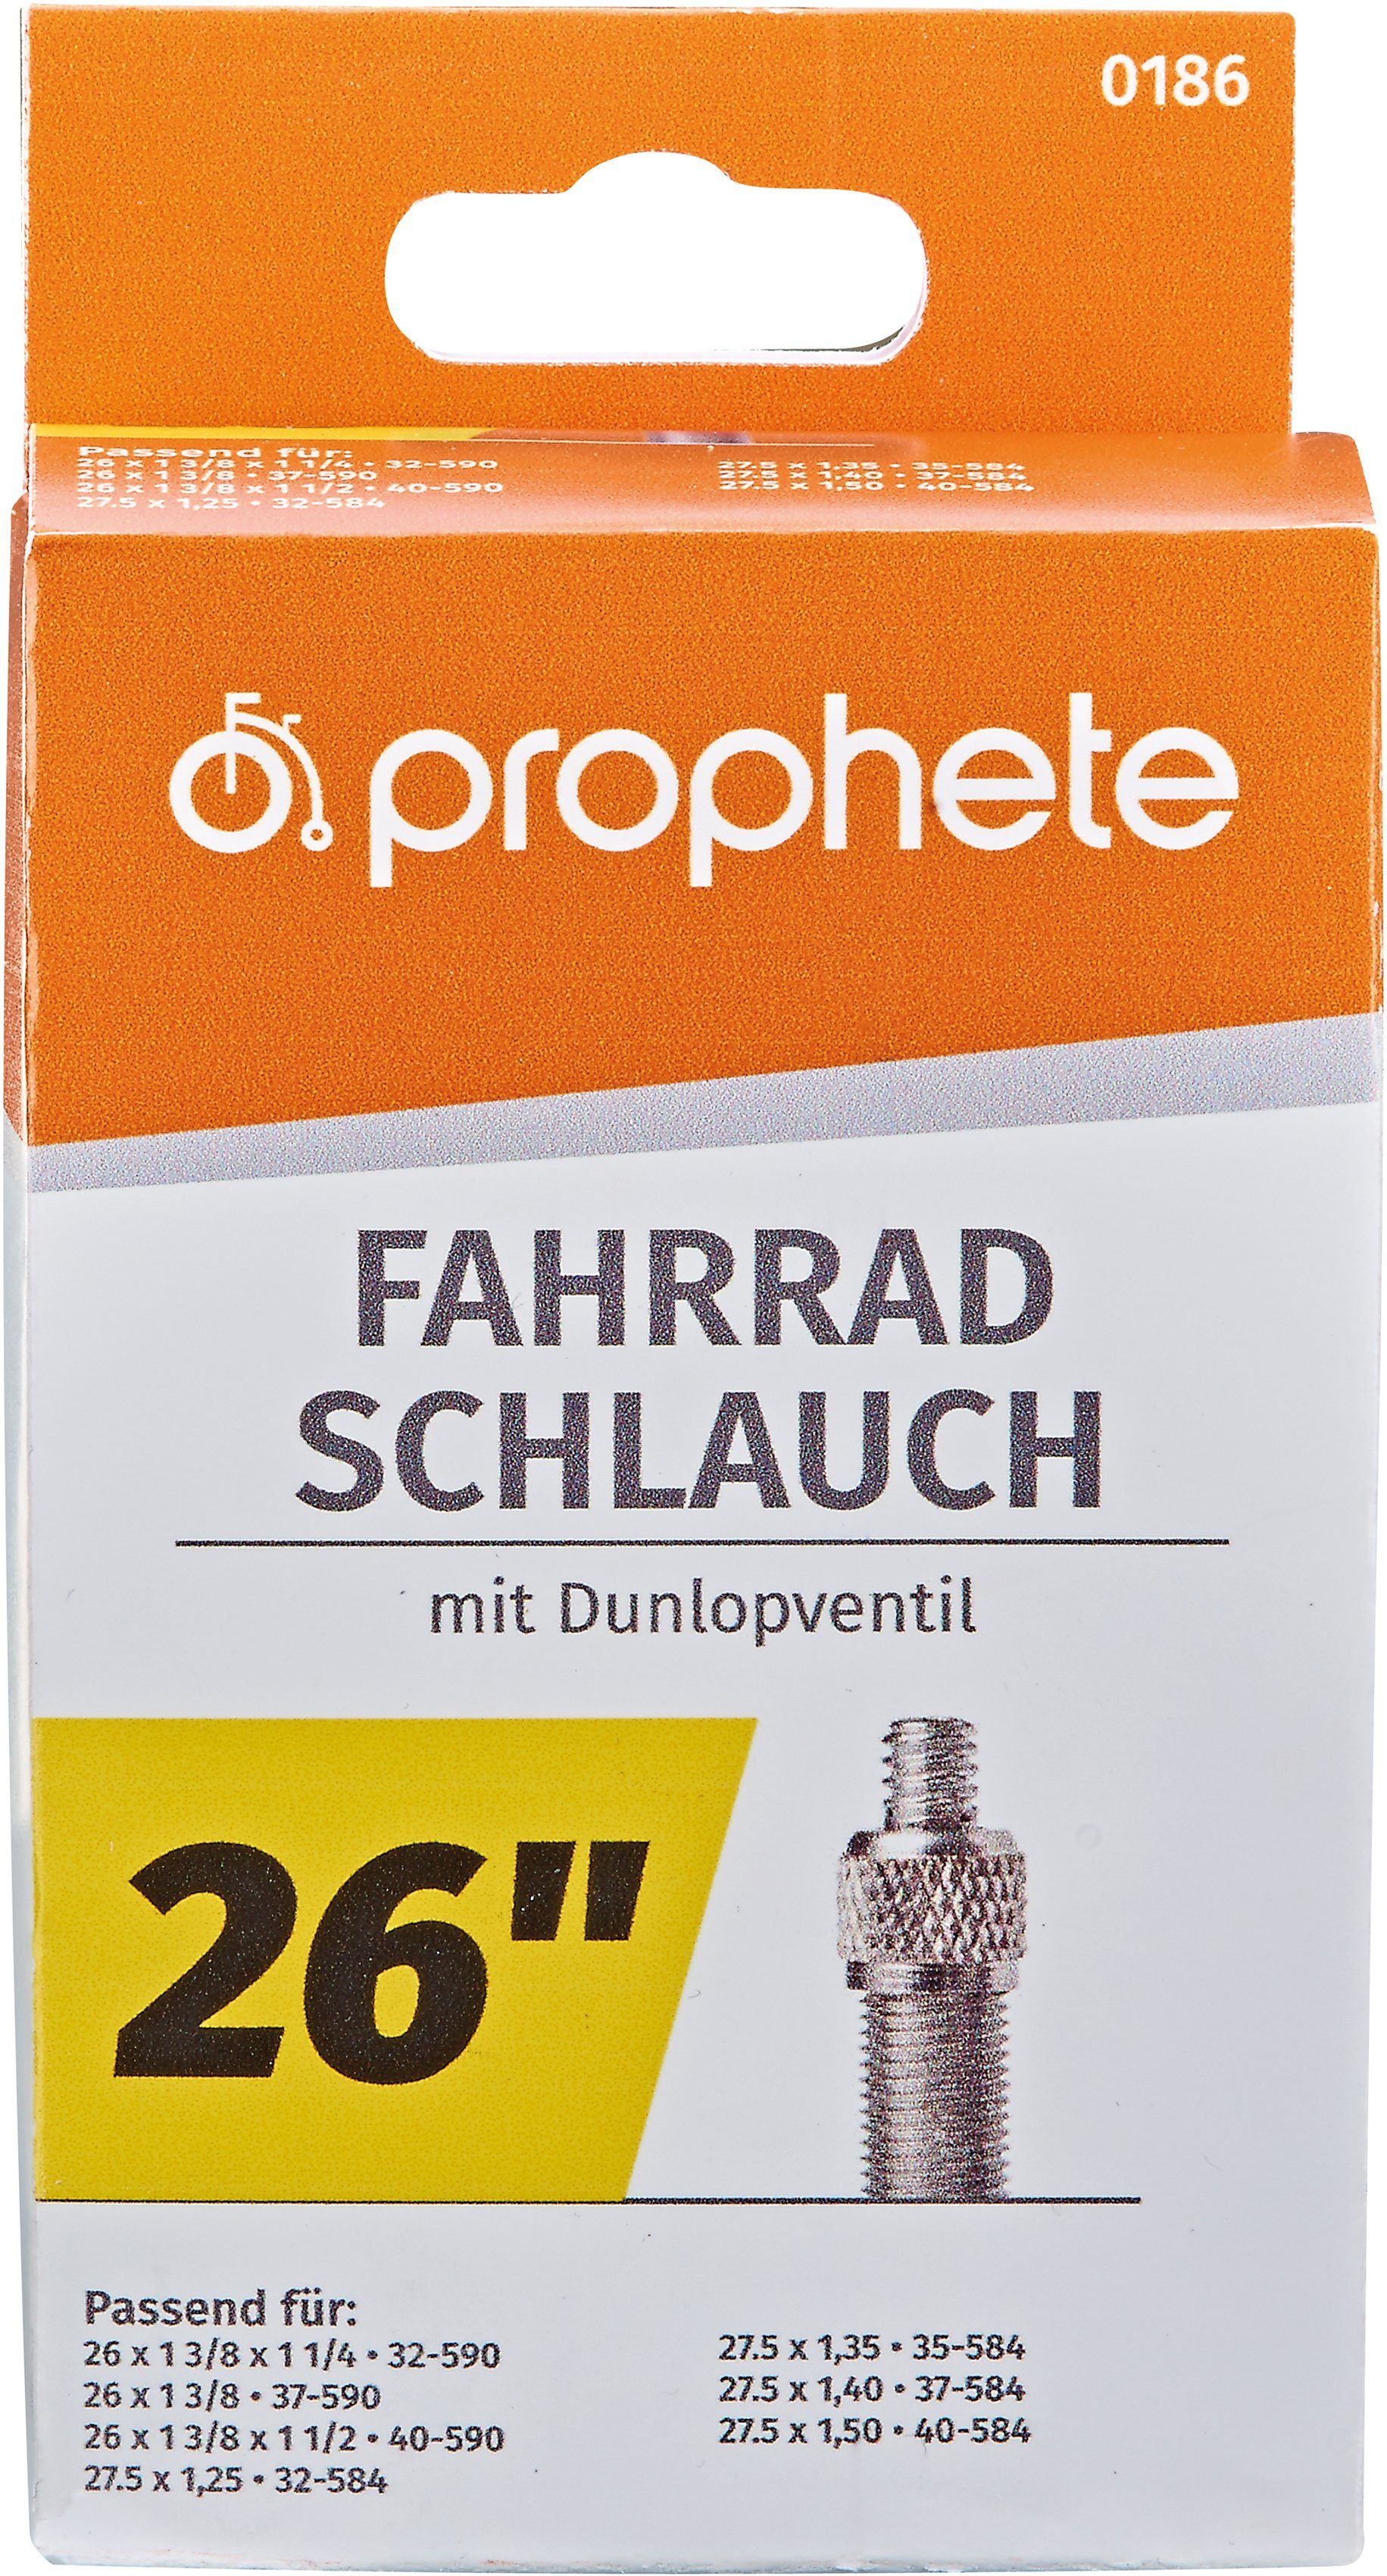 (66,04 Fahrradschlauch, Zoll 26 Prophete Fahrradschlauch cm)